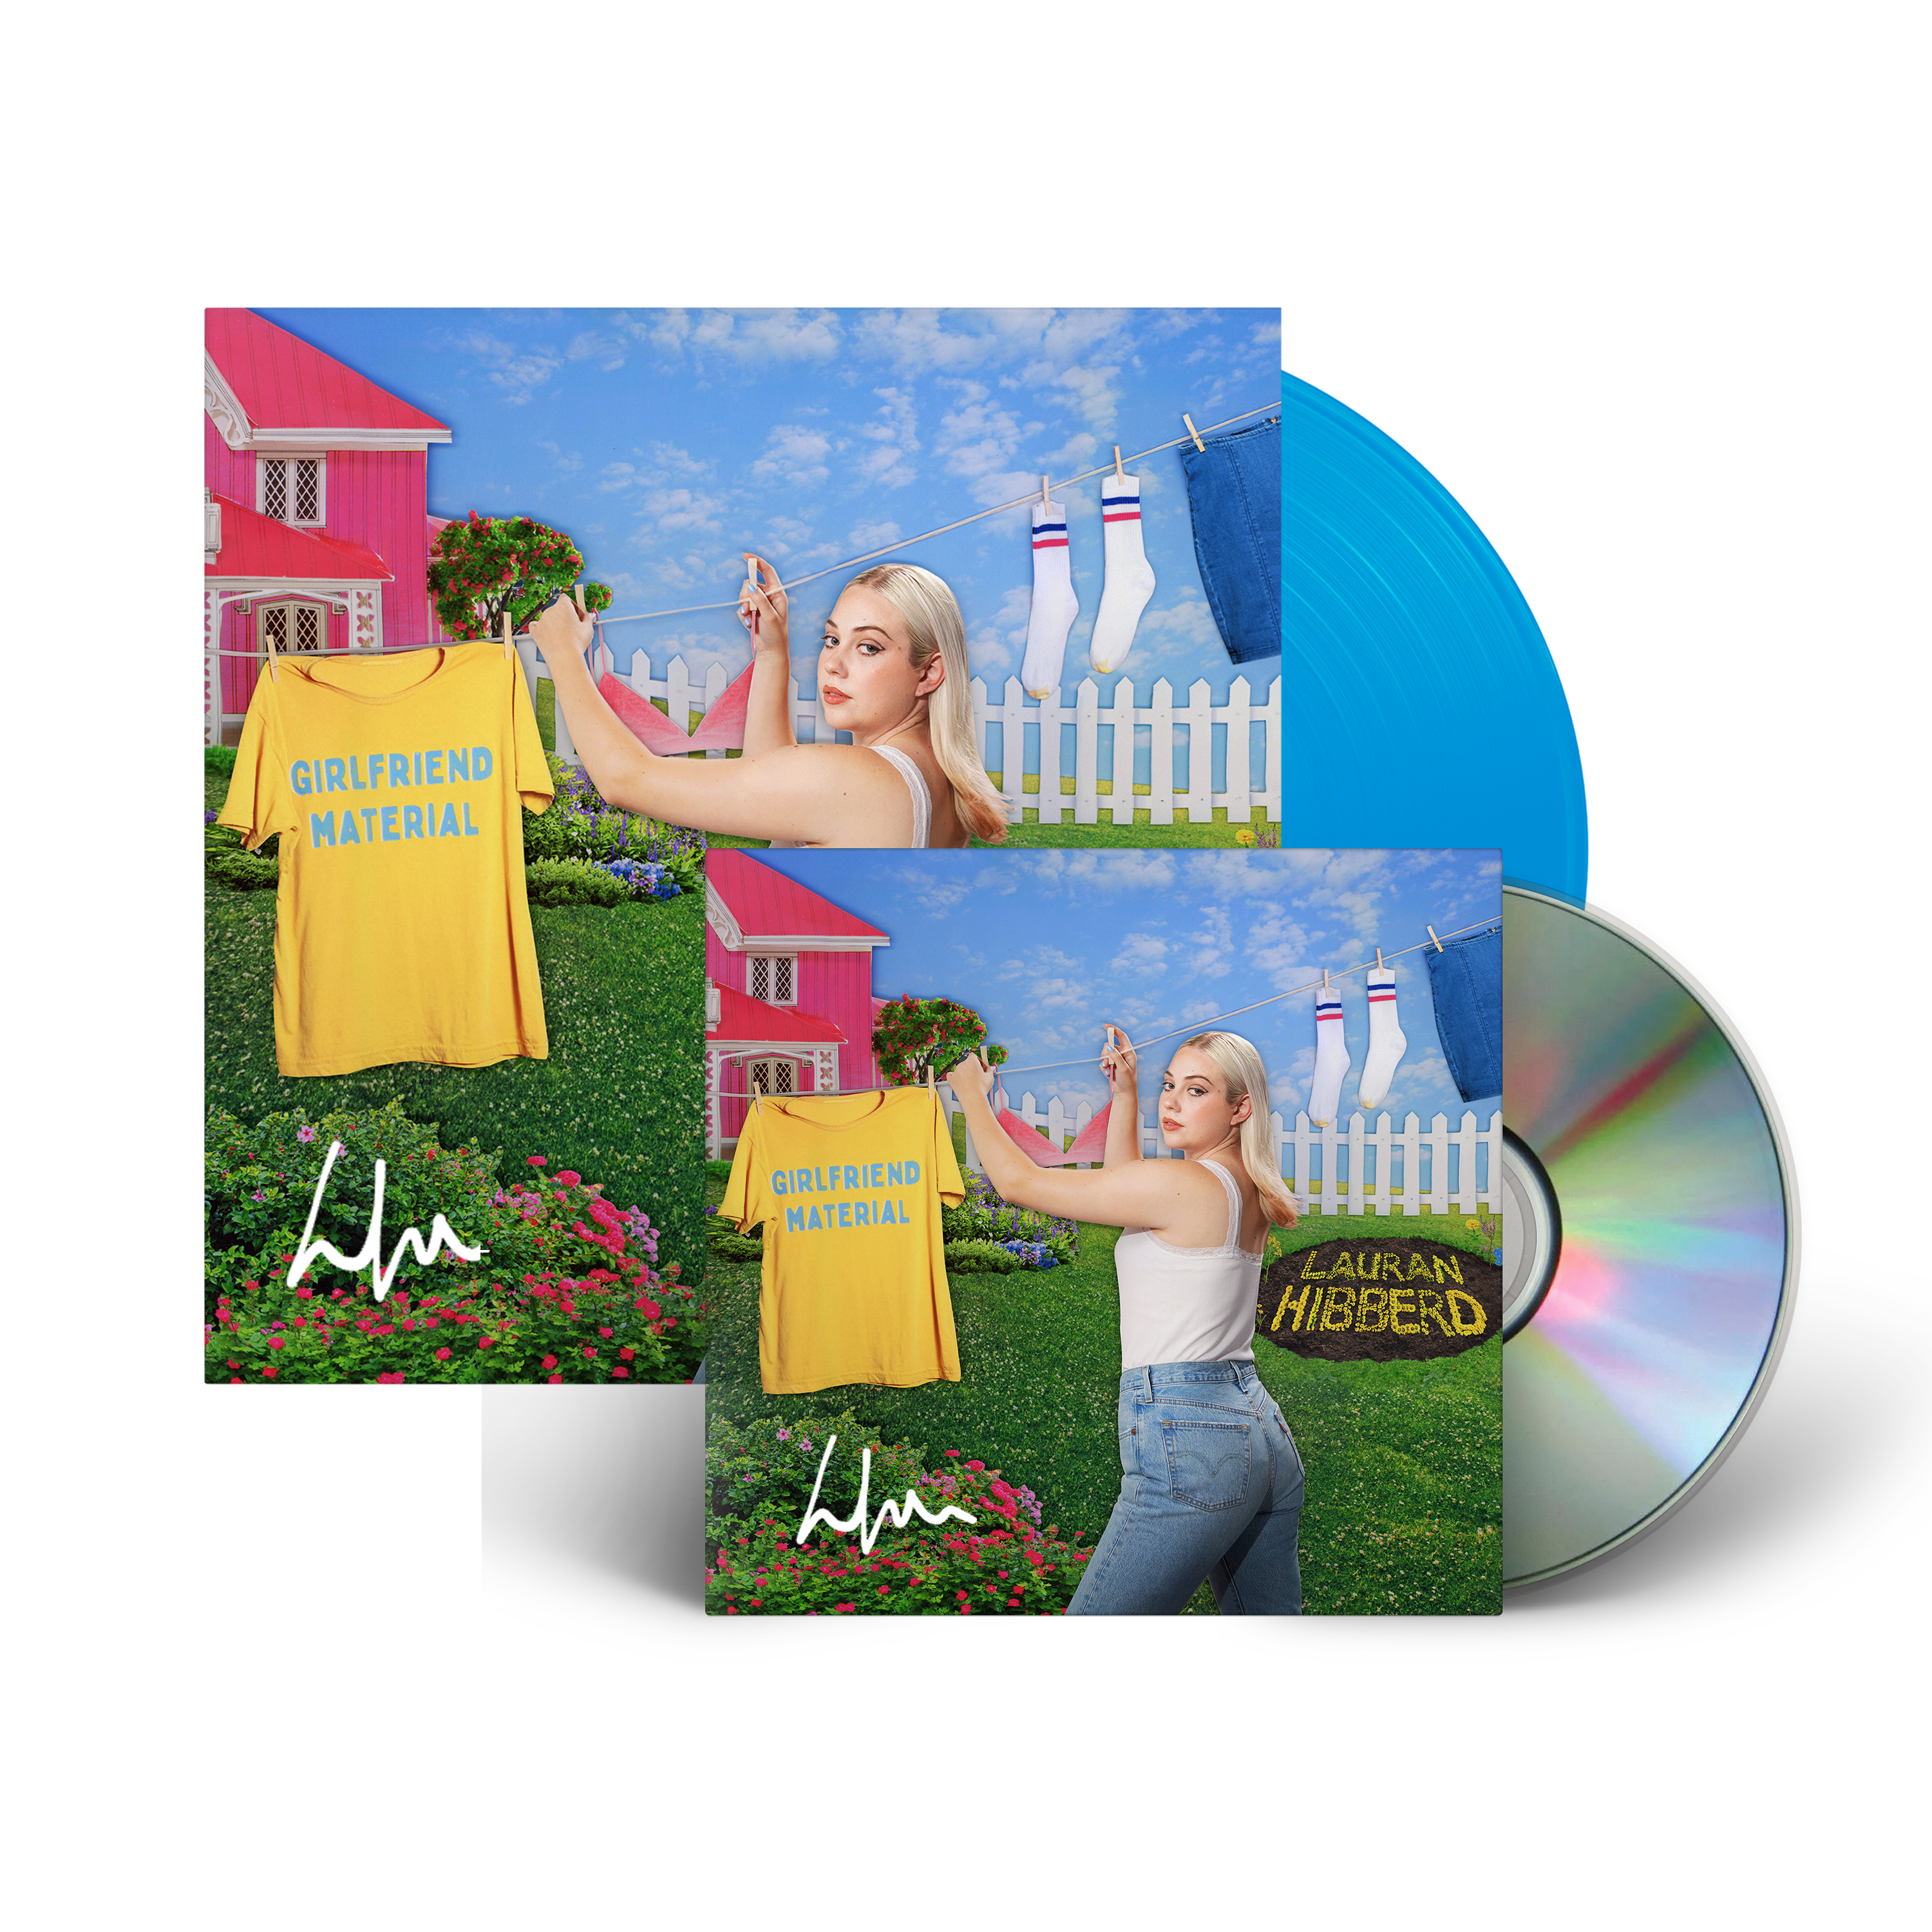 girlfriend material: Signed CD + Signed Blue LP Bundle